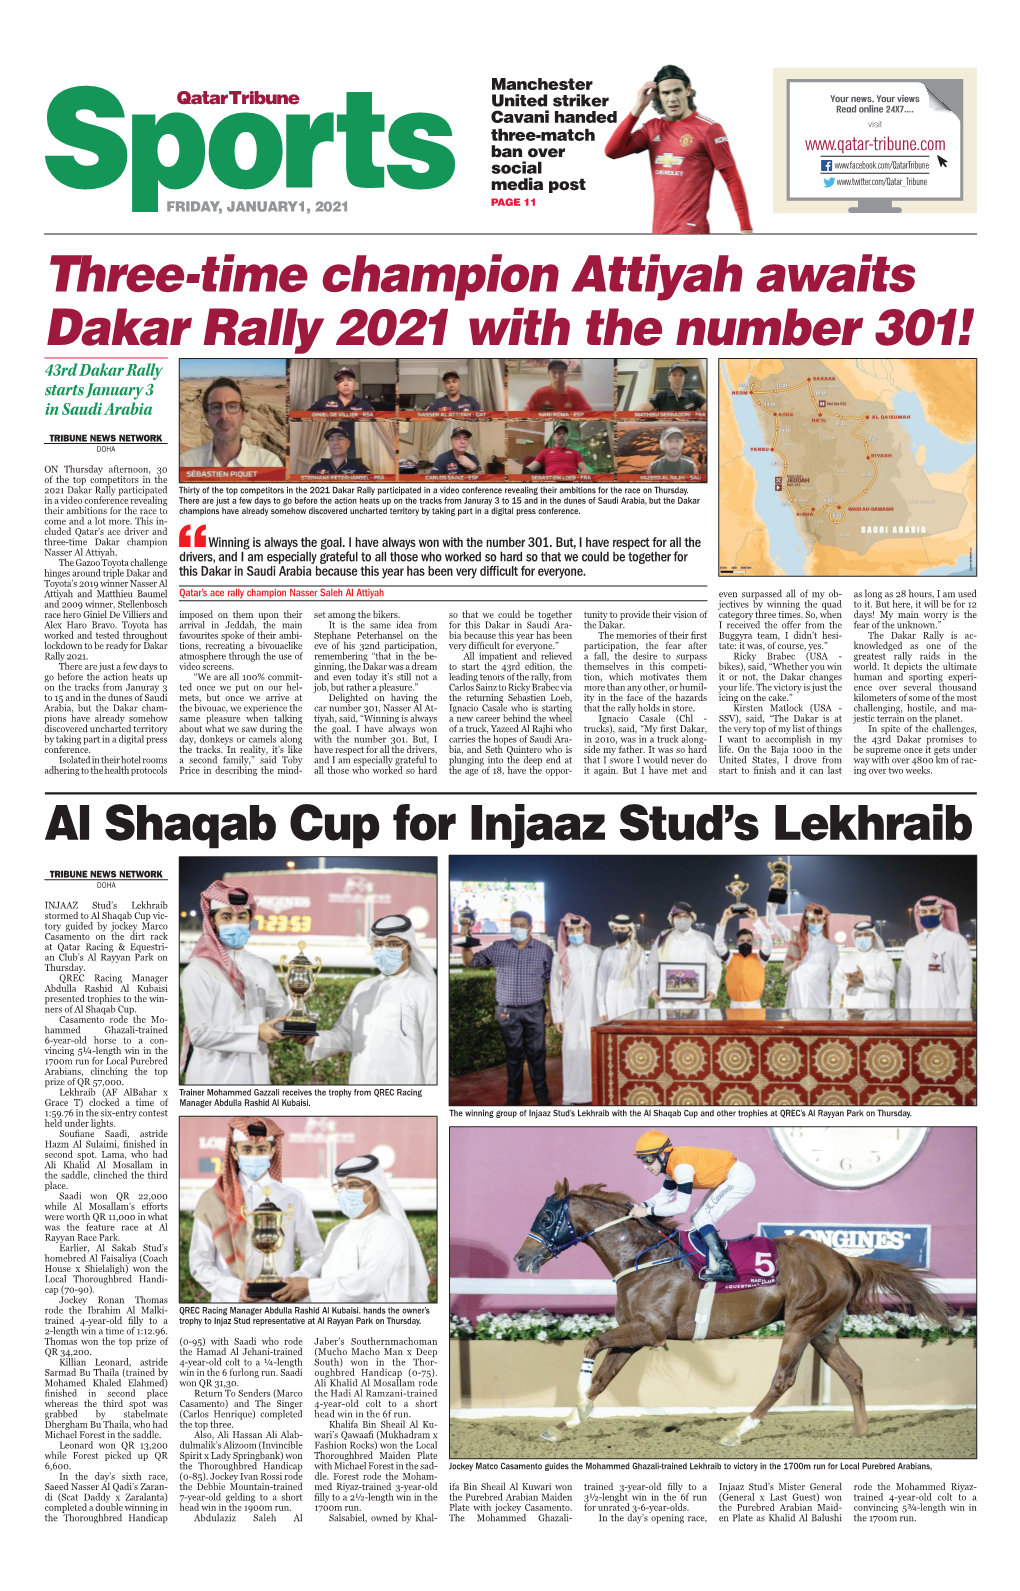 Three-Time Champion Attiyah Awaits Dakar Rally 2021 with the Number 301! 43Rd Dakar Rally Starts January 3 in Saudi Arabia